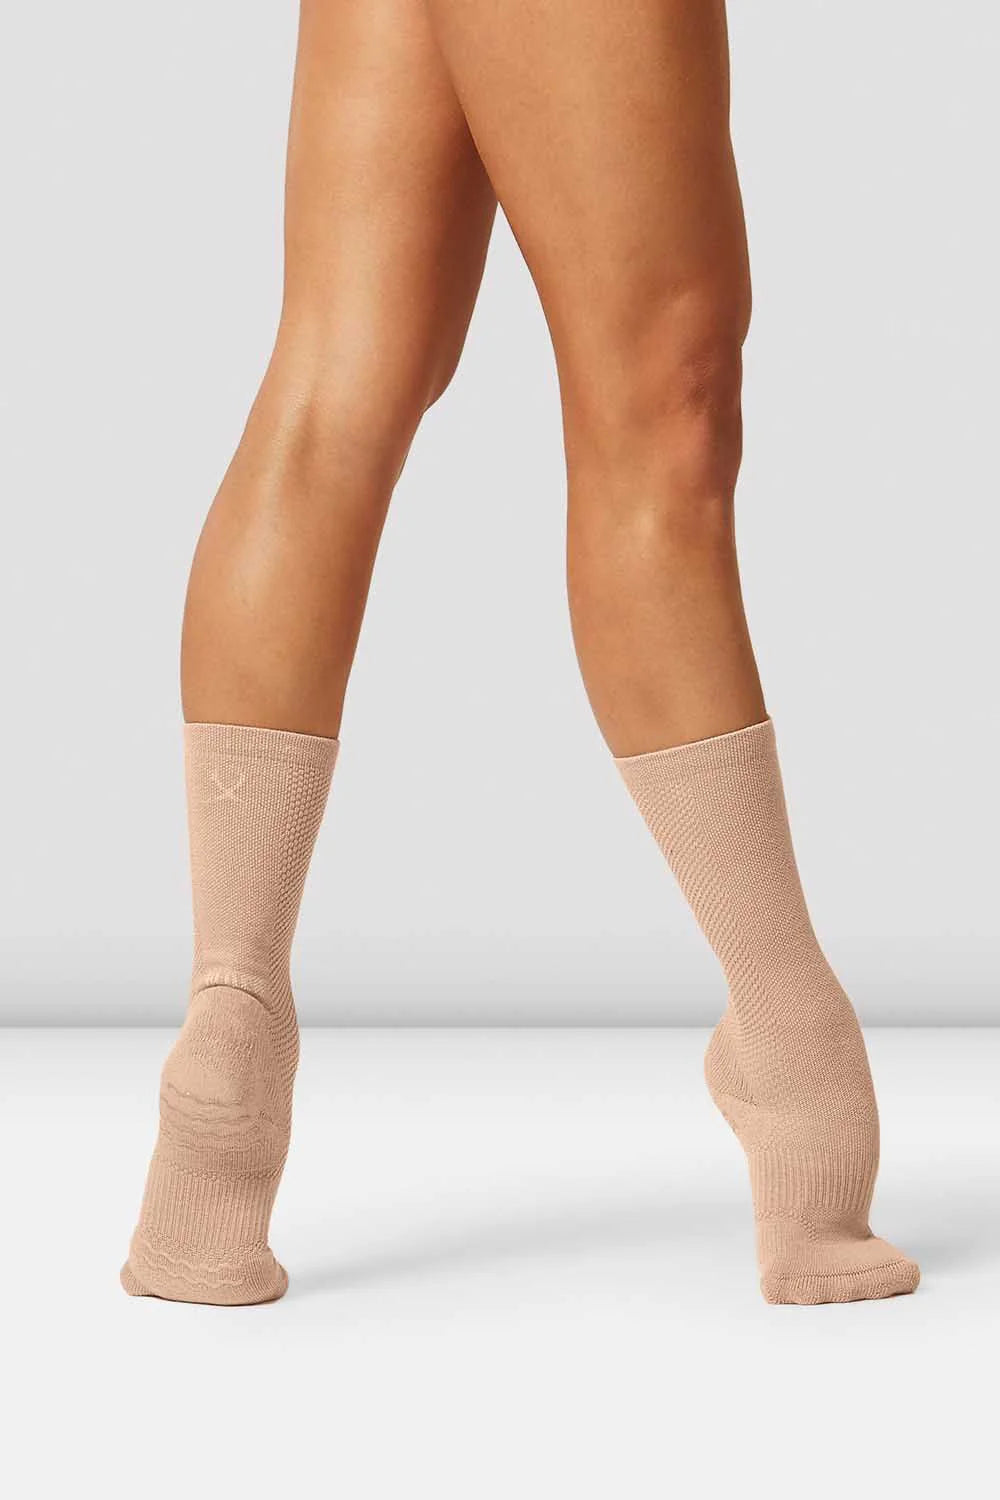 Bloch Socks (contemporary dance socks) – MoveME Dance Boutique